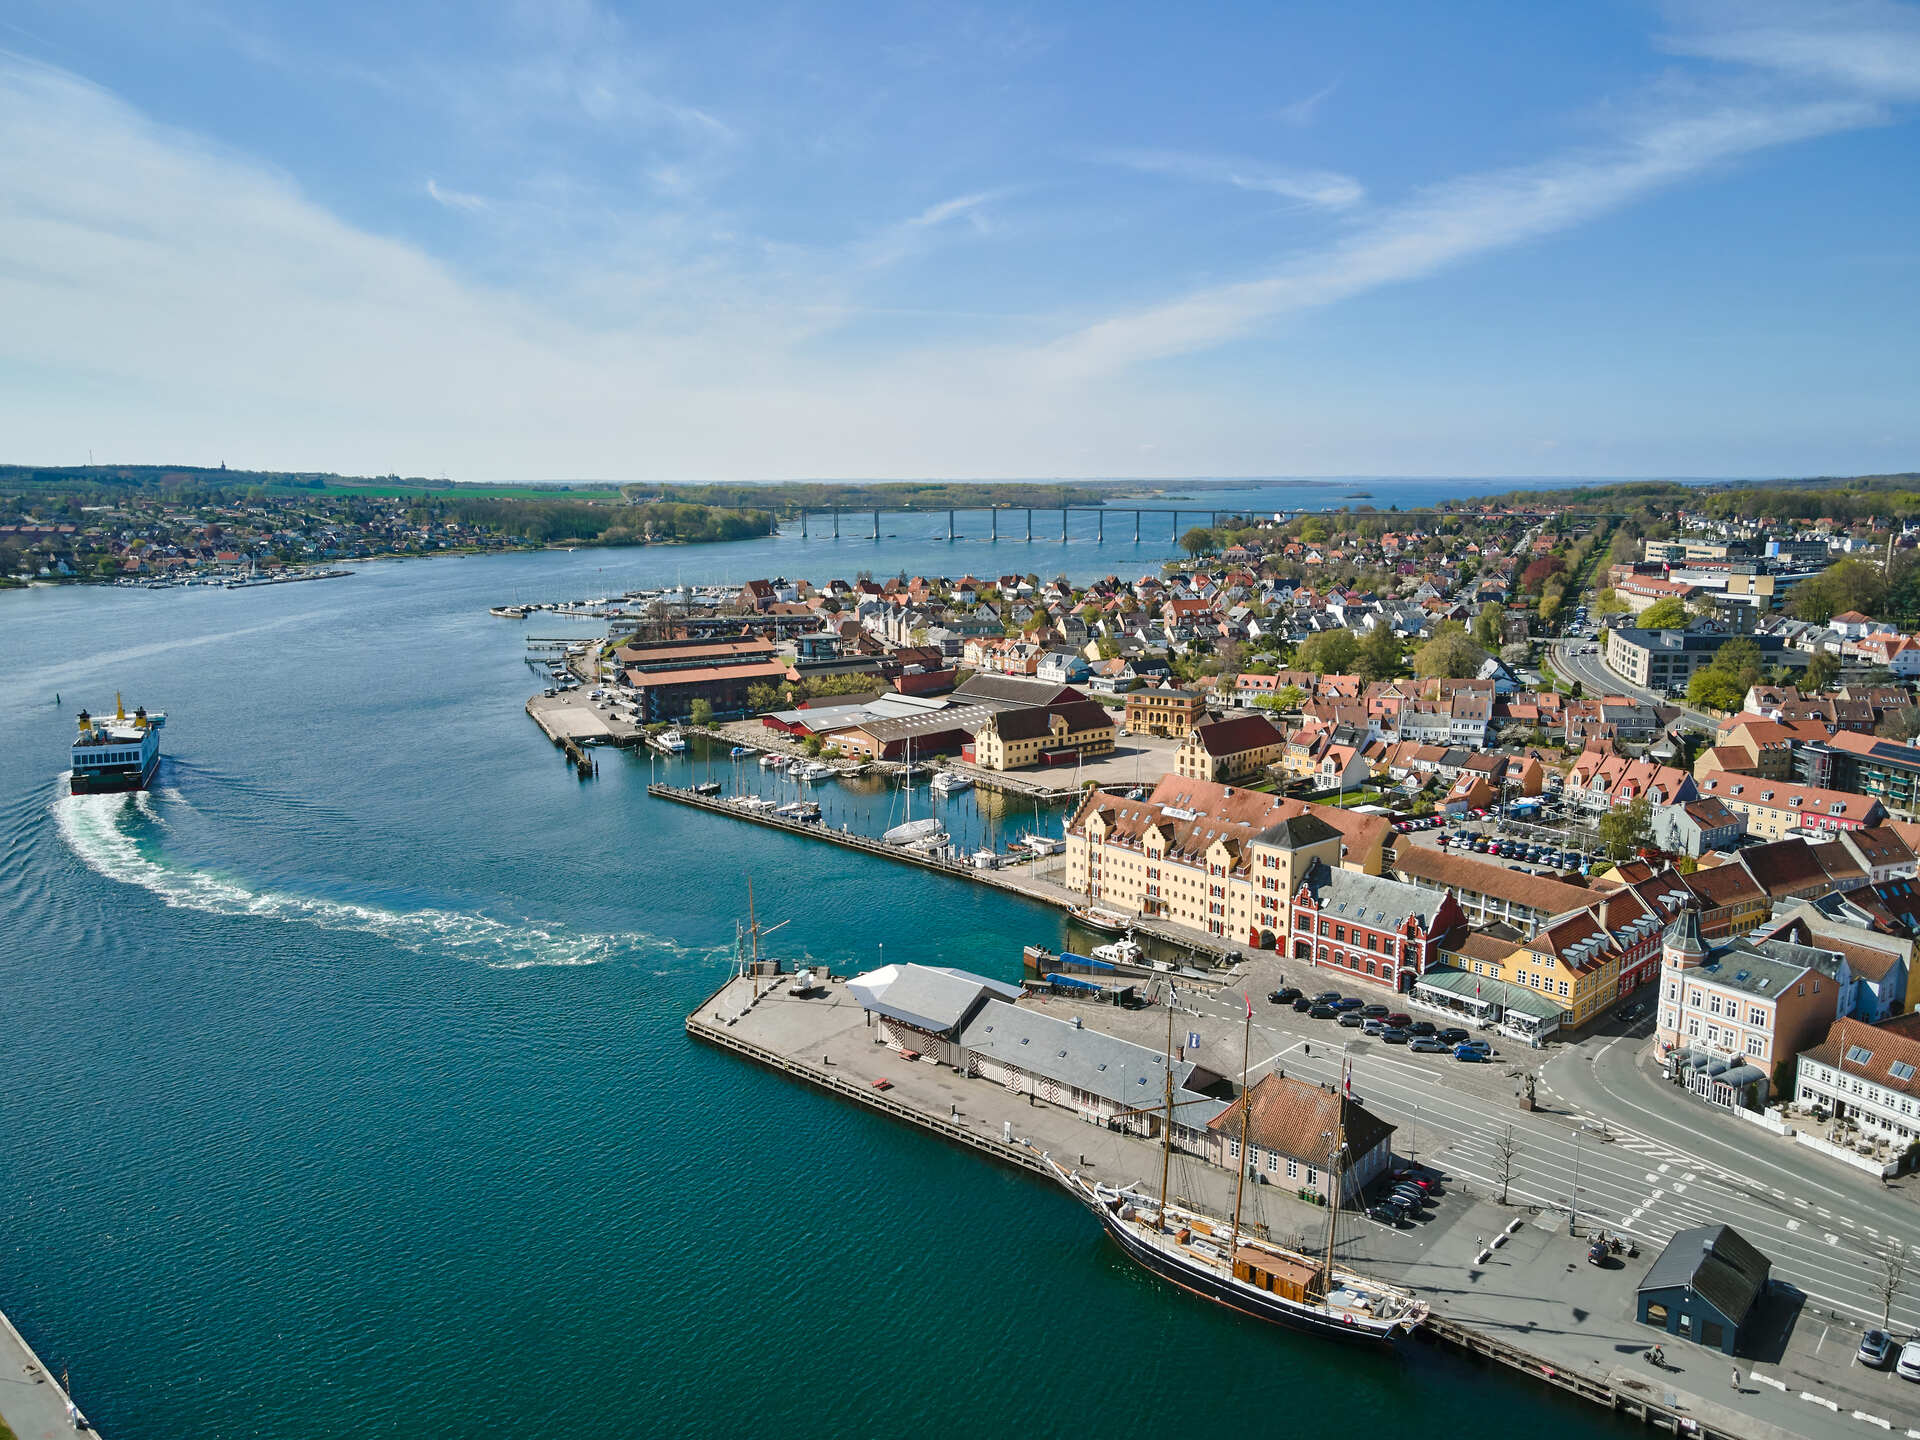 drone image over Svendborg harbour